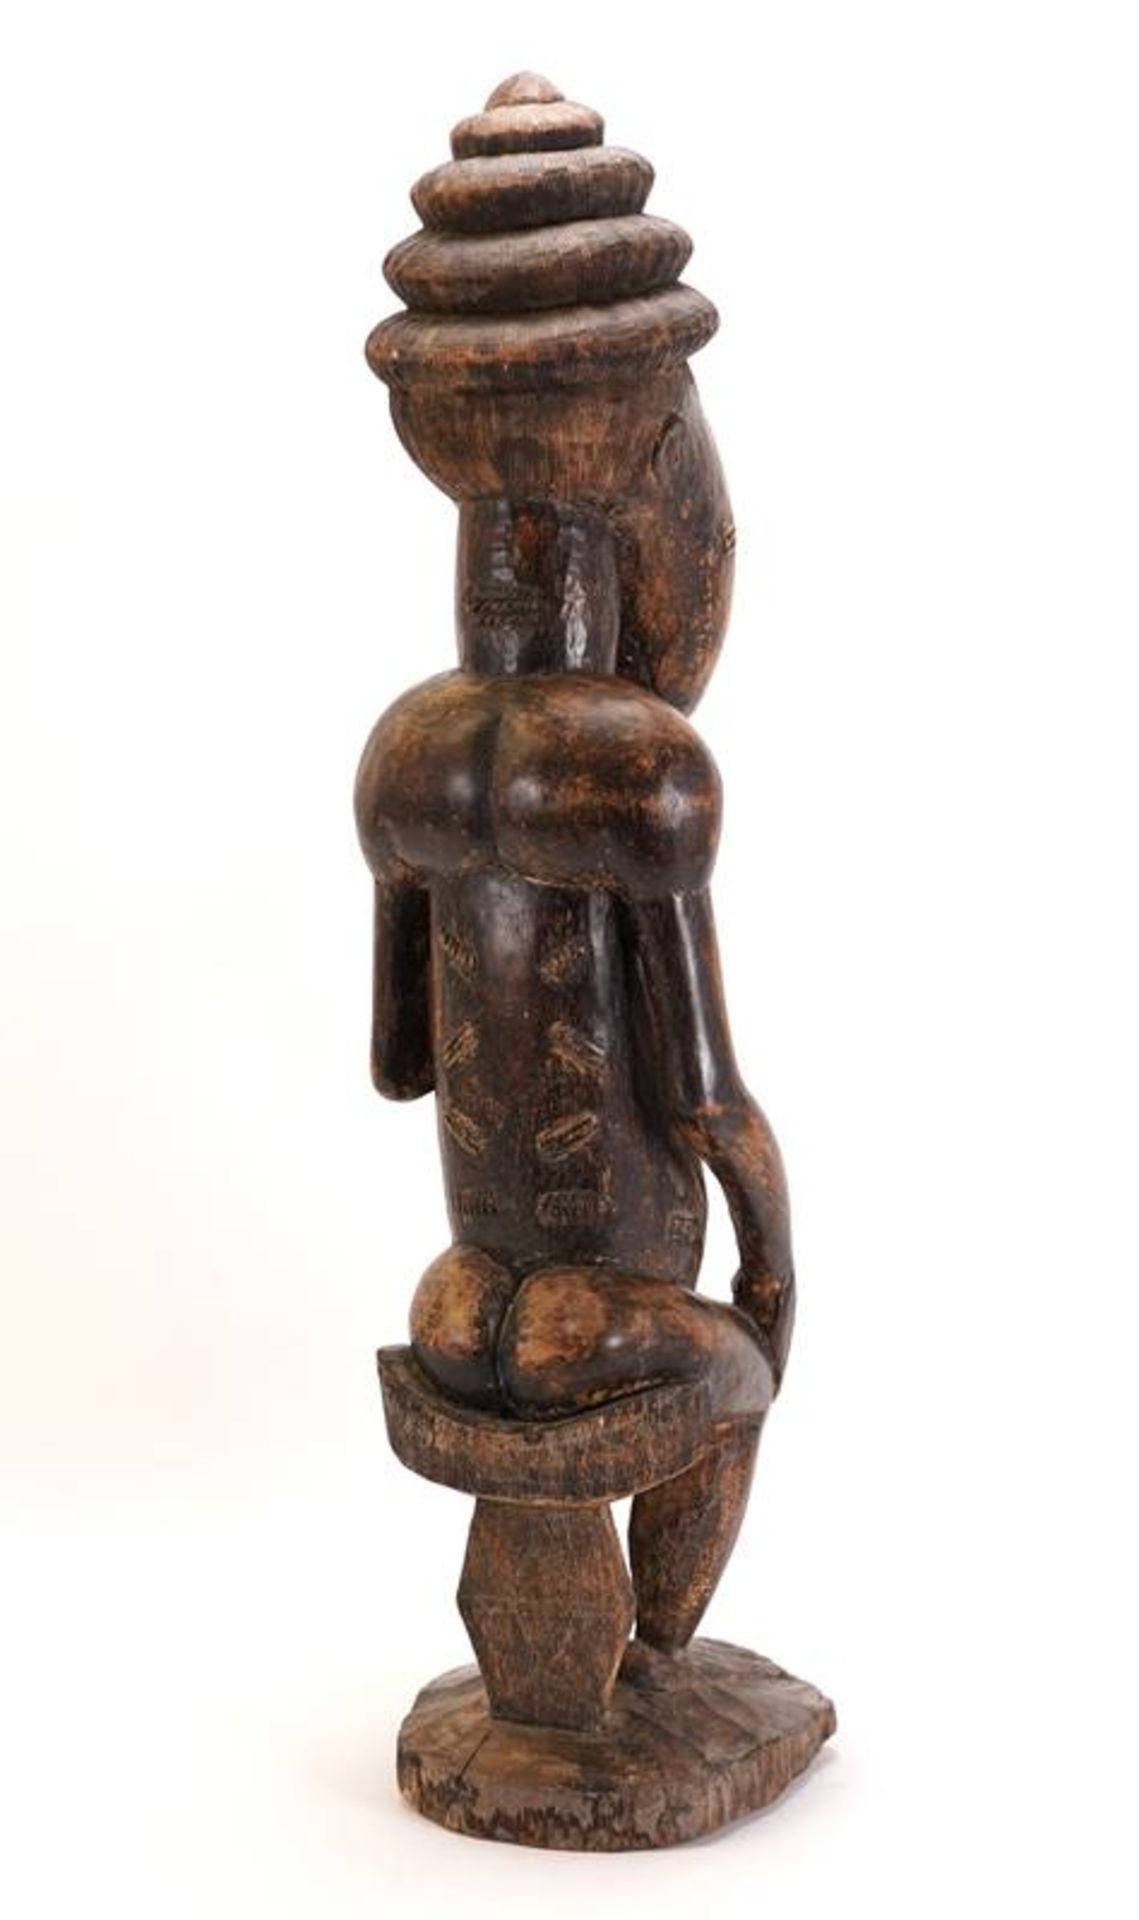 Big Ancestor figure - Image 2 of 2